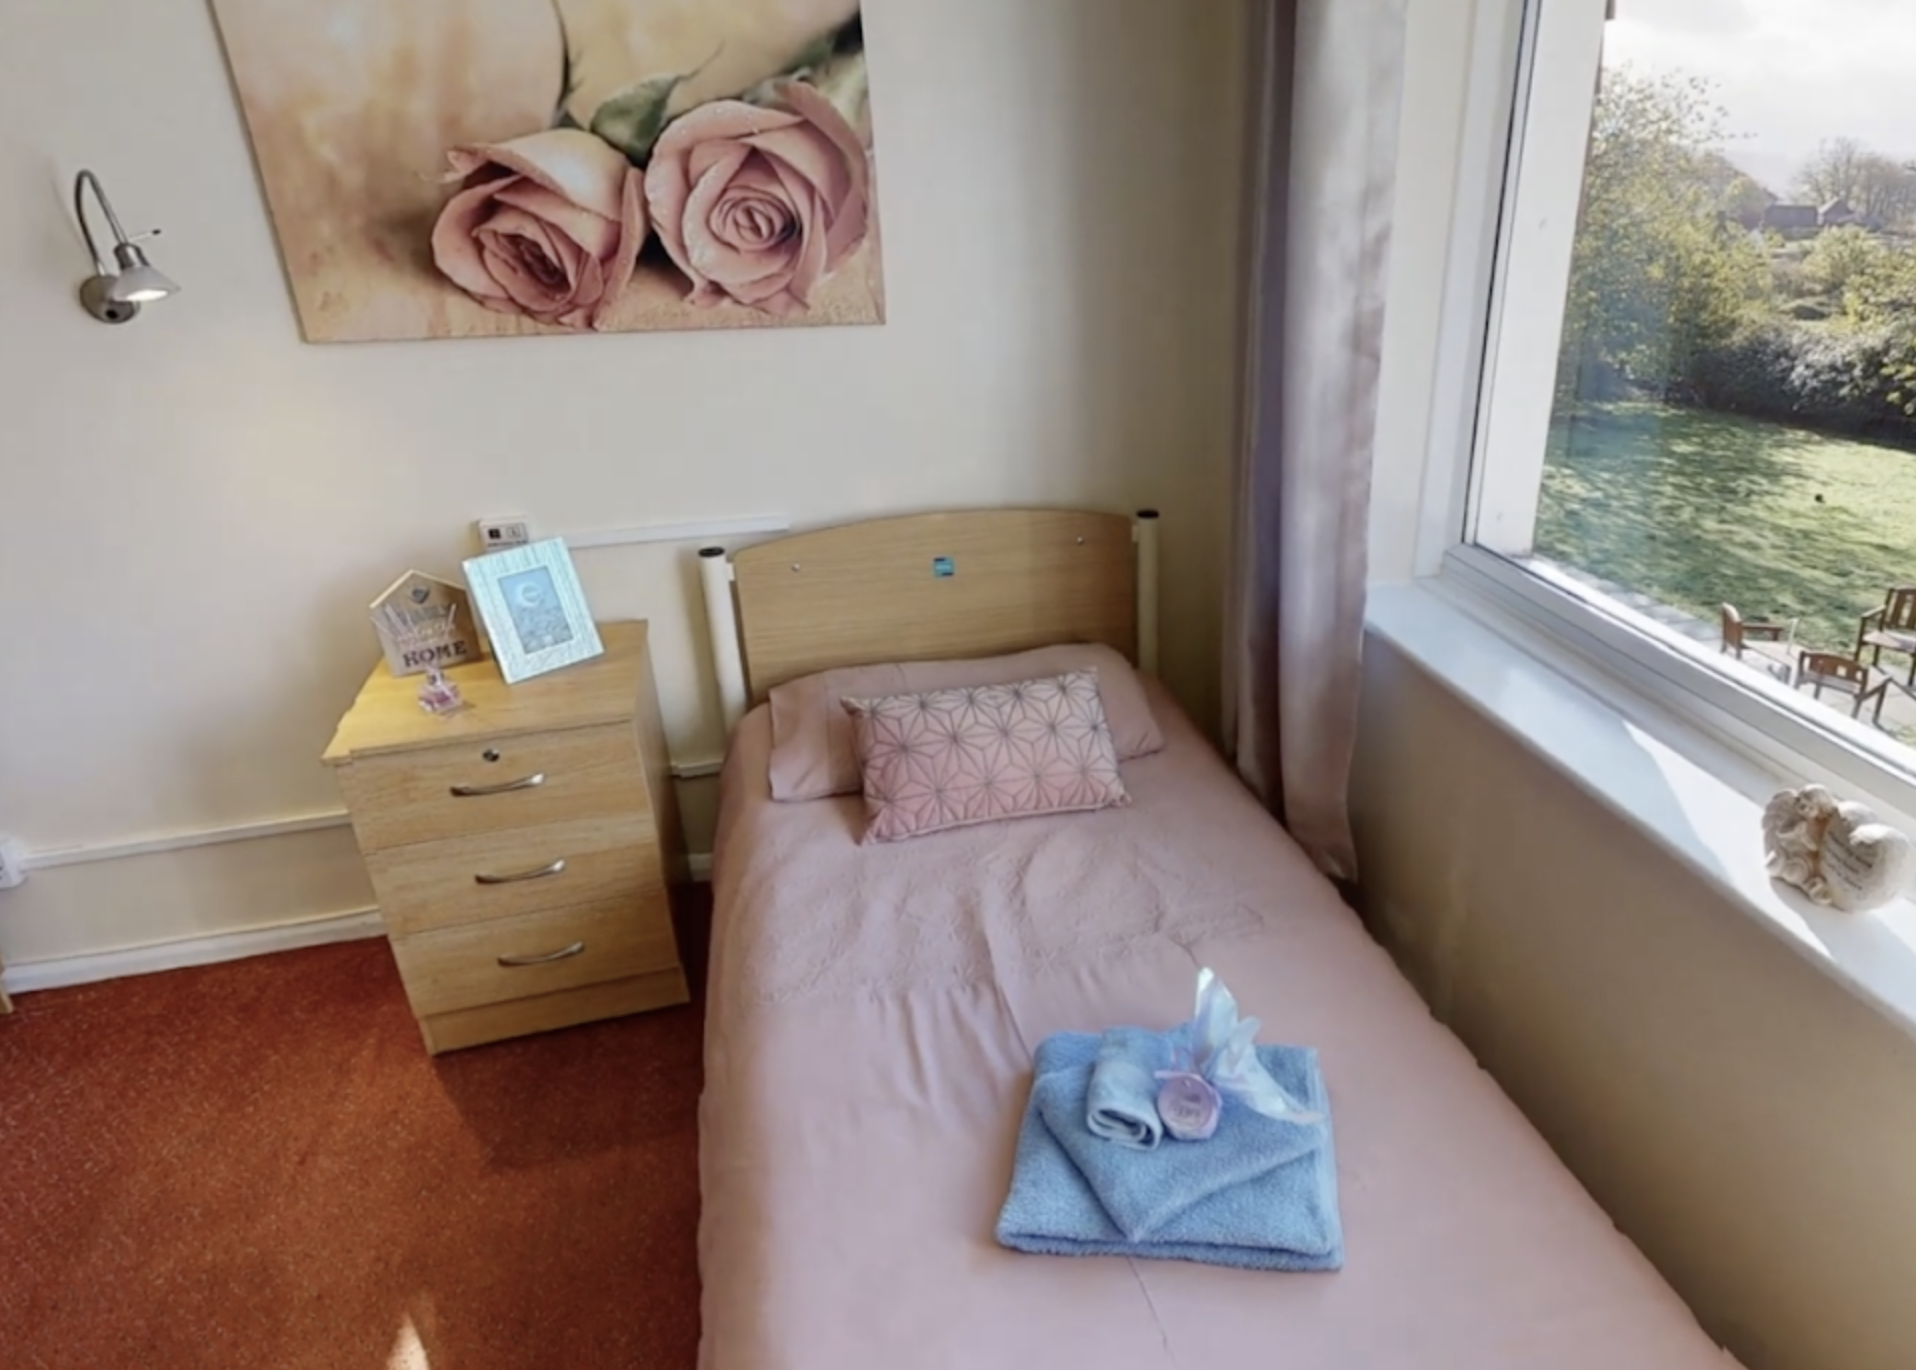 Bedroom of Roselands care home in Rye, East Sussex